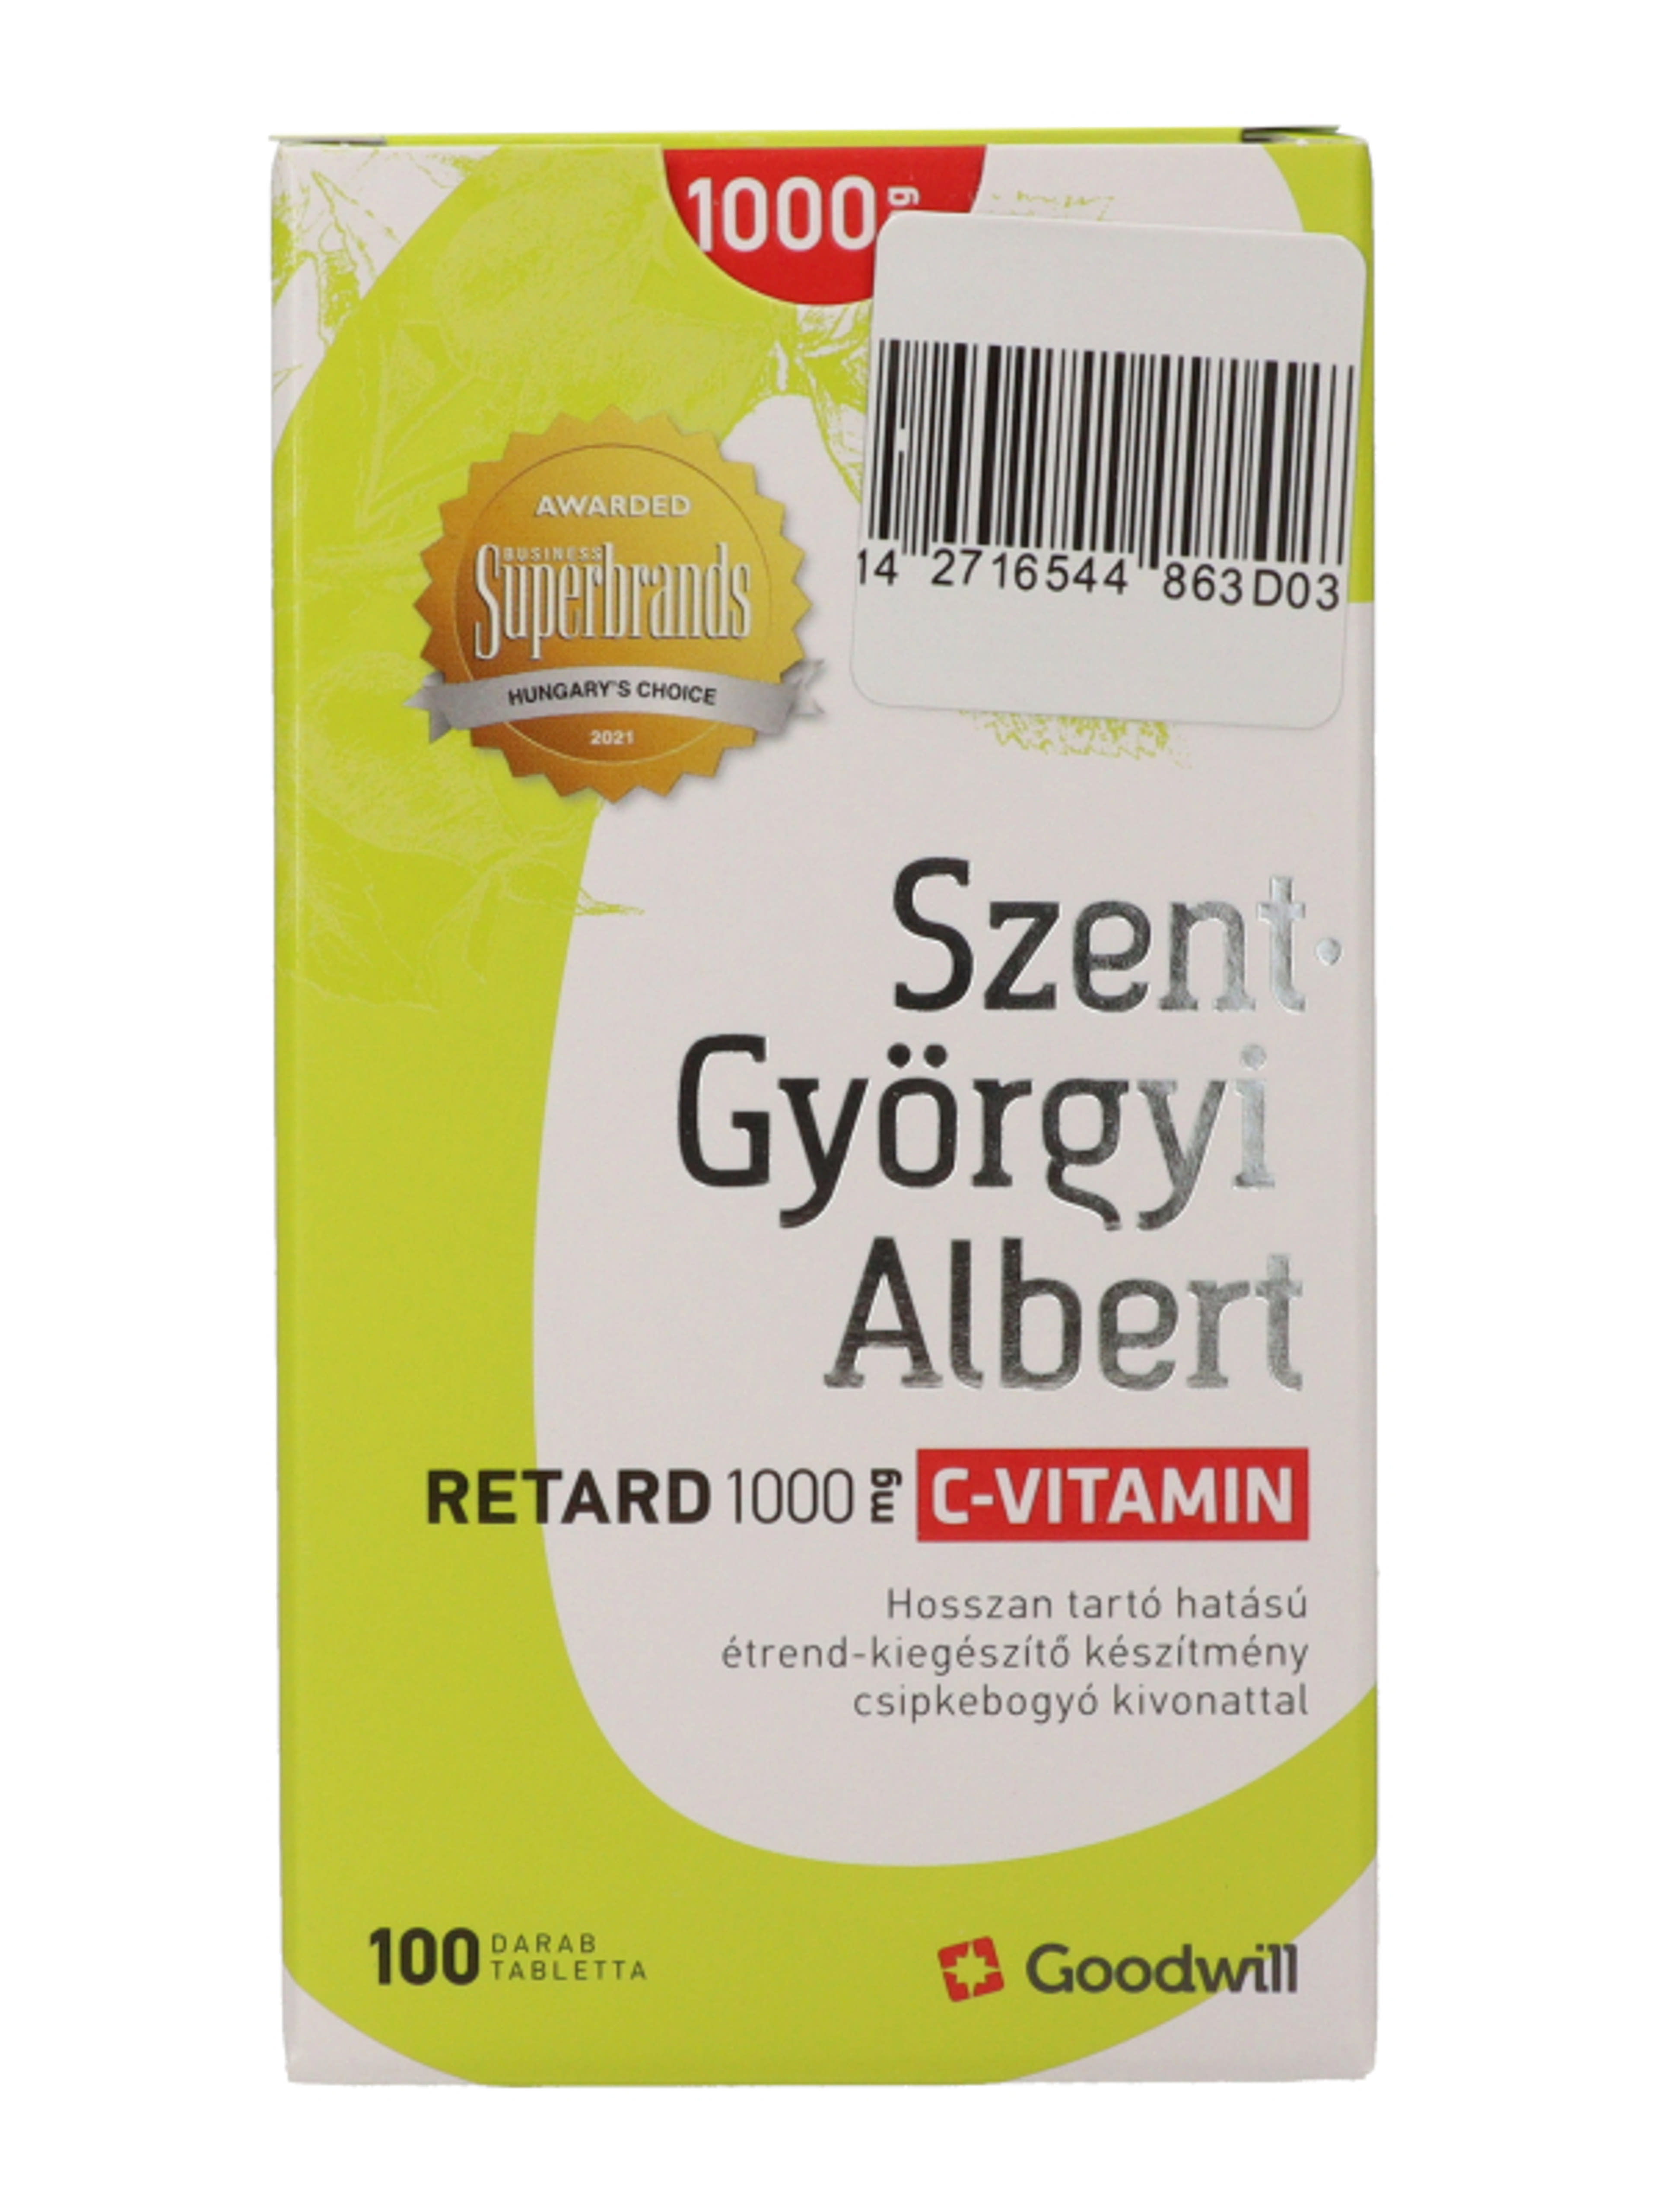 Szent-Györgyi Albert C-Vitamin Retard Tabletta - 100 db-4